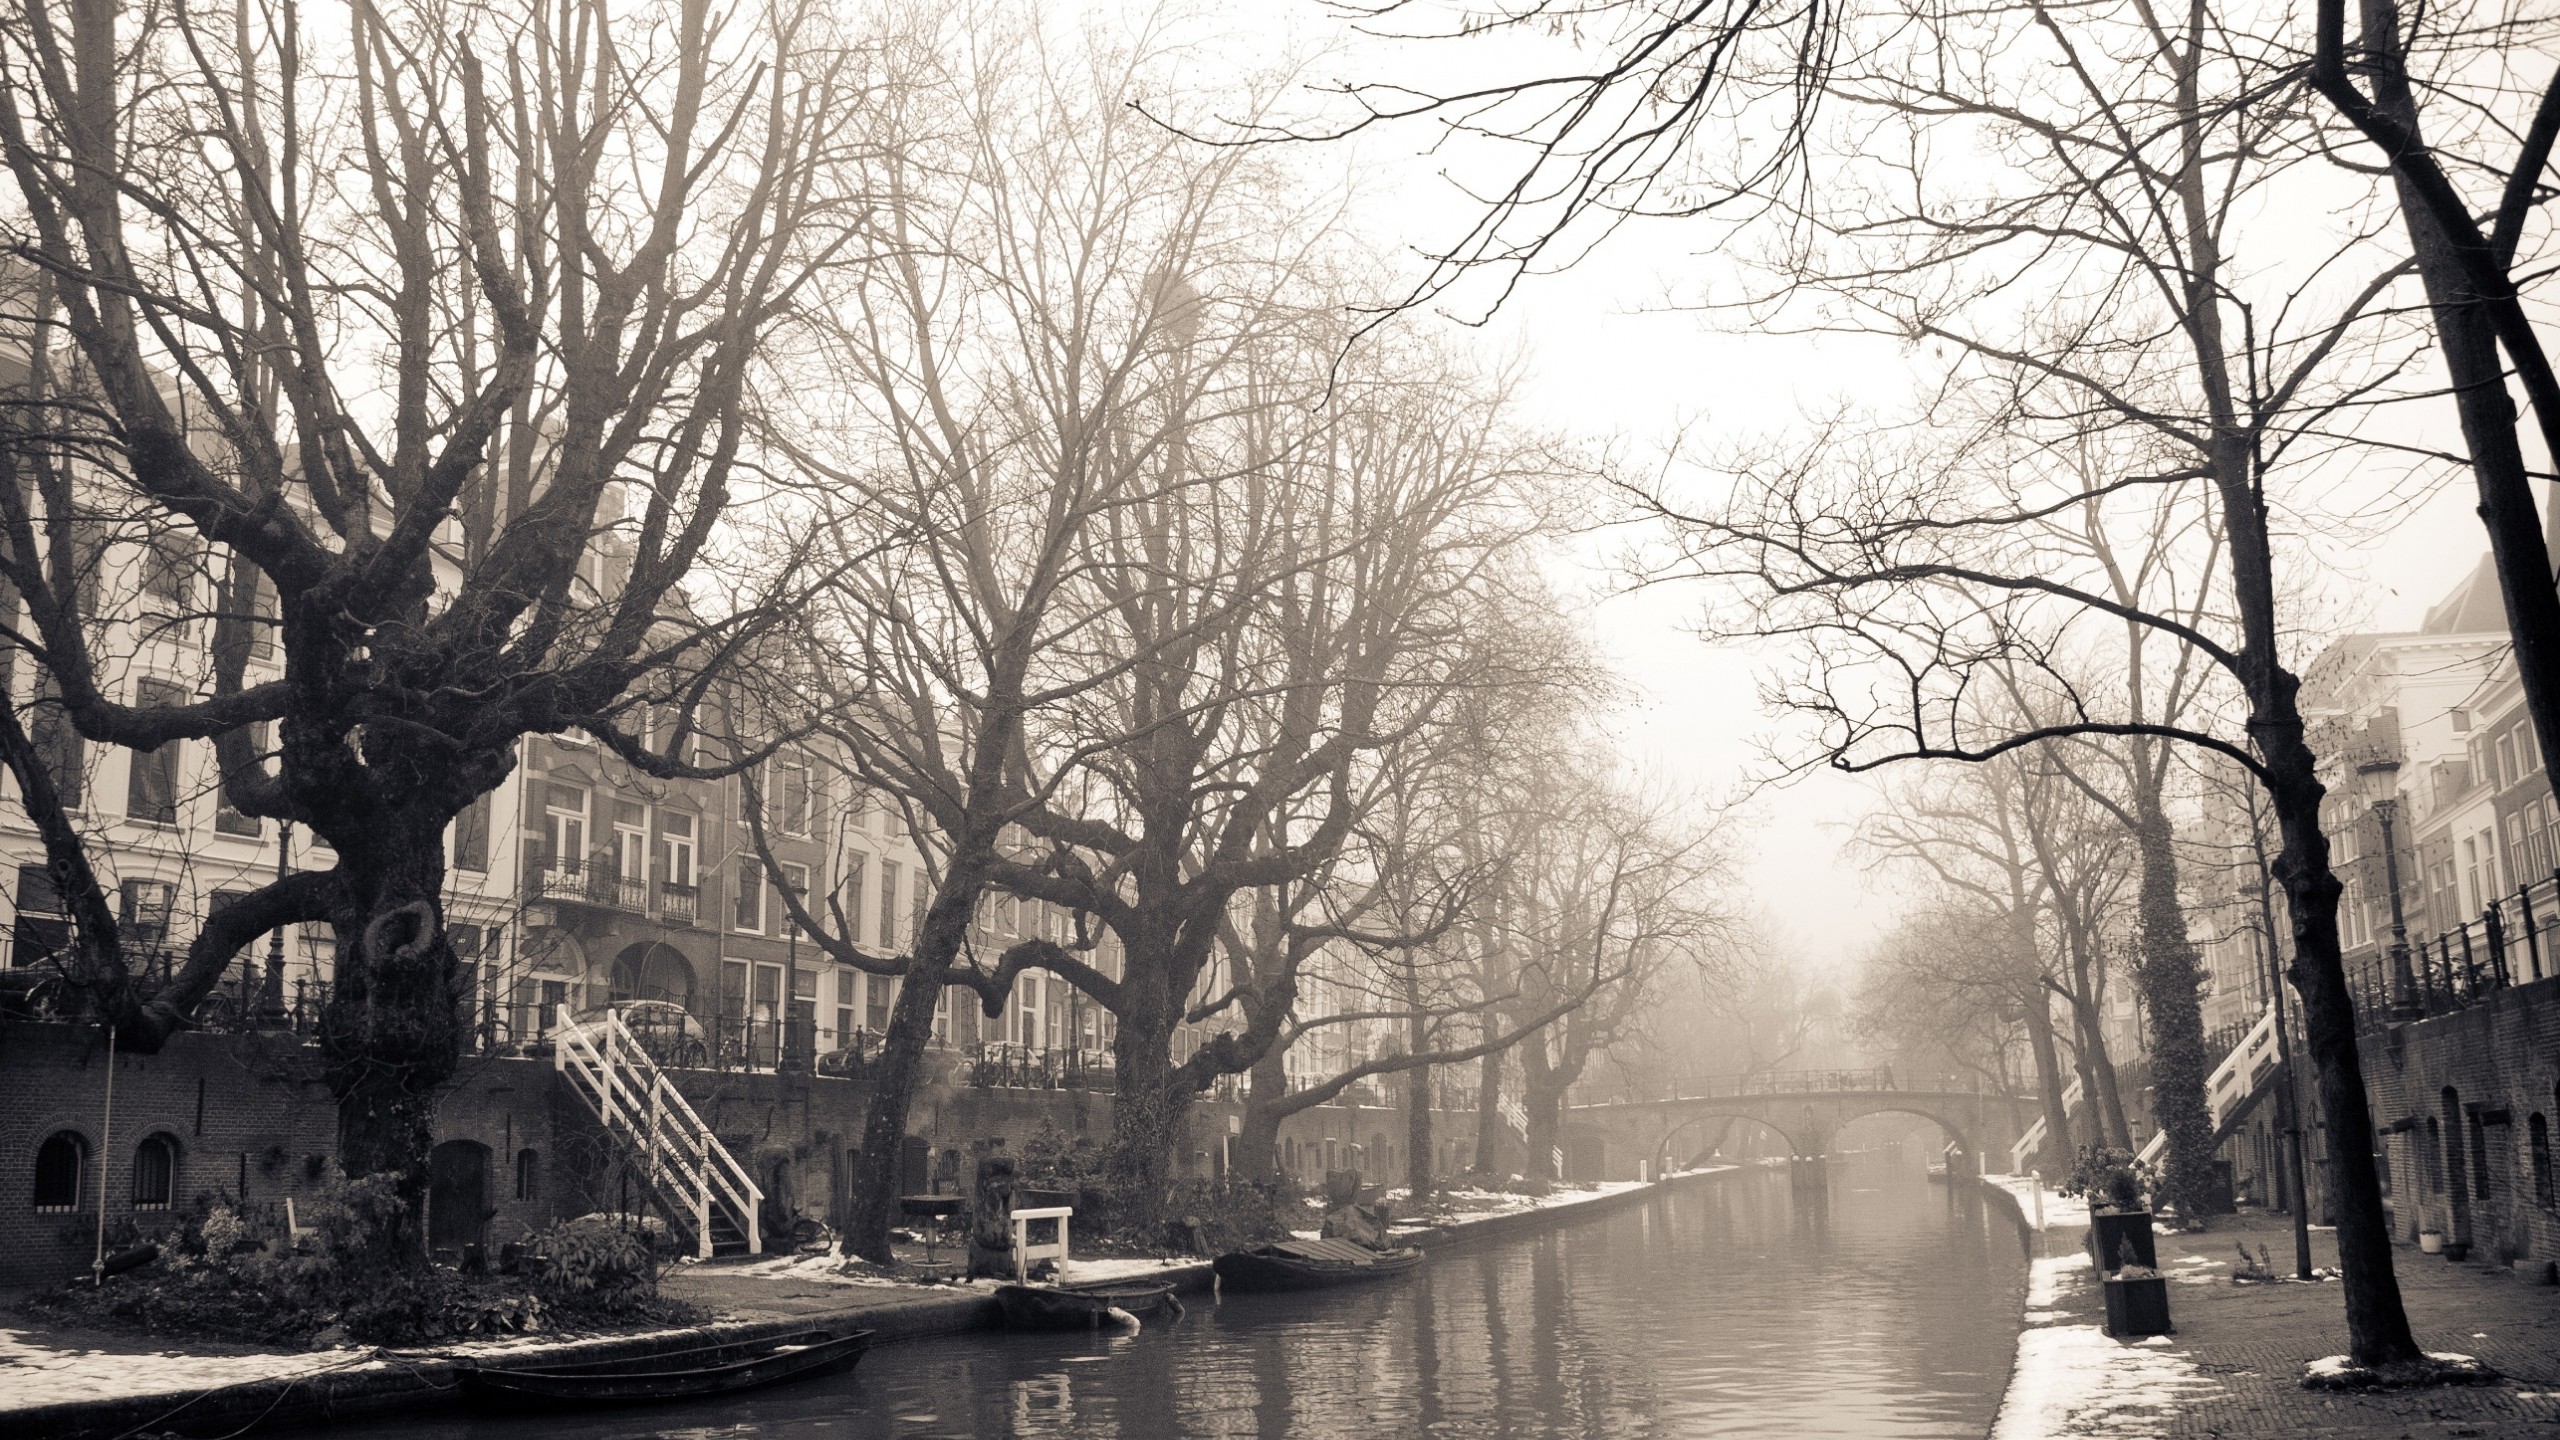 General 2560x1440 Utrecht sepia river snow mist boat urban trees city